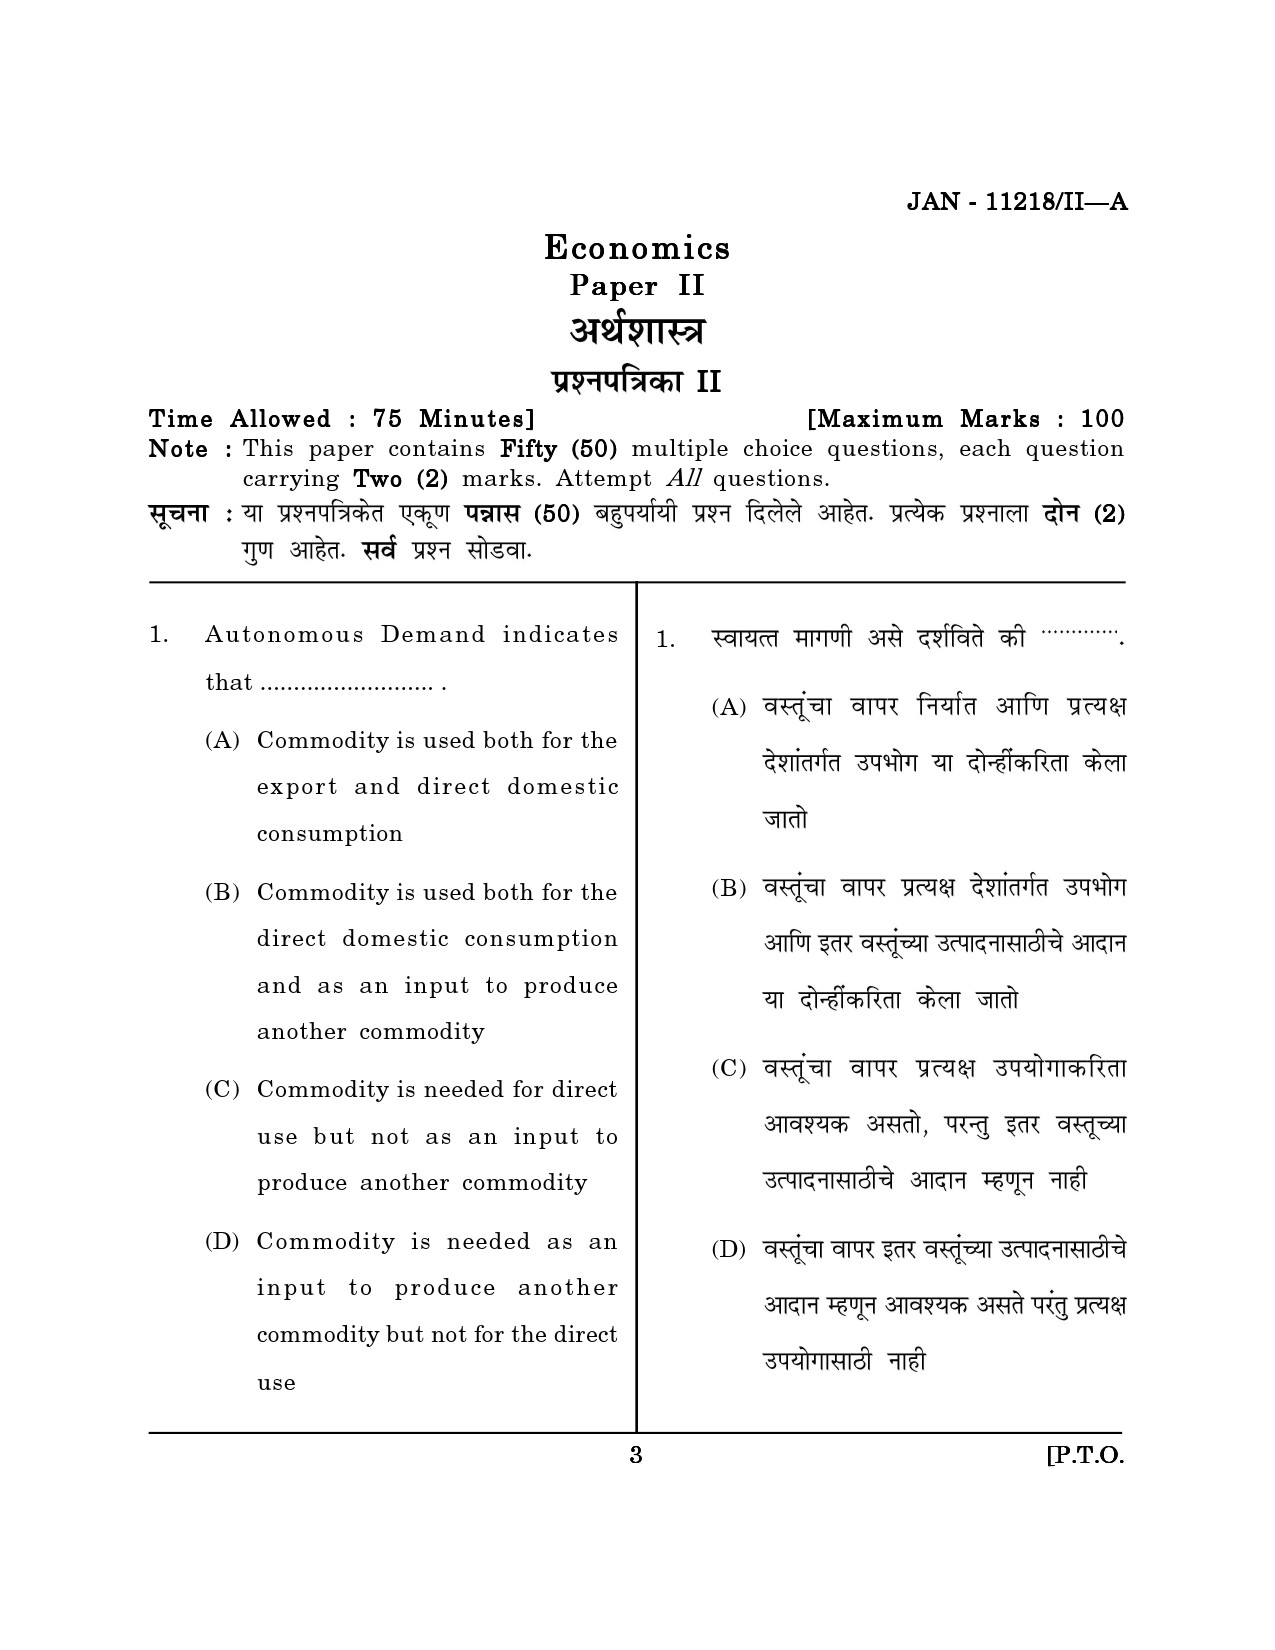 Maharashtra SET Economics Question Paper II January 2018 2